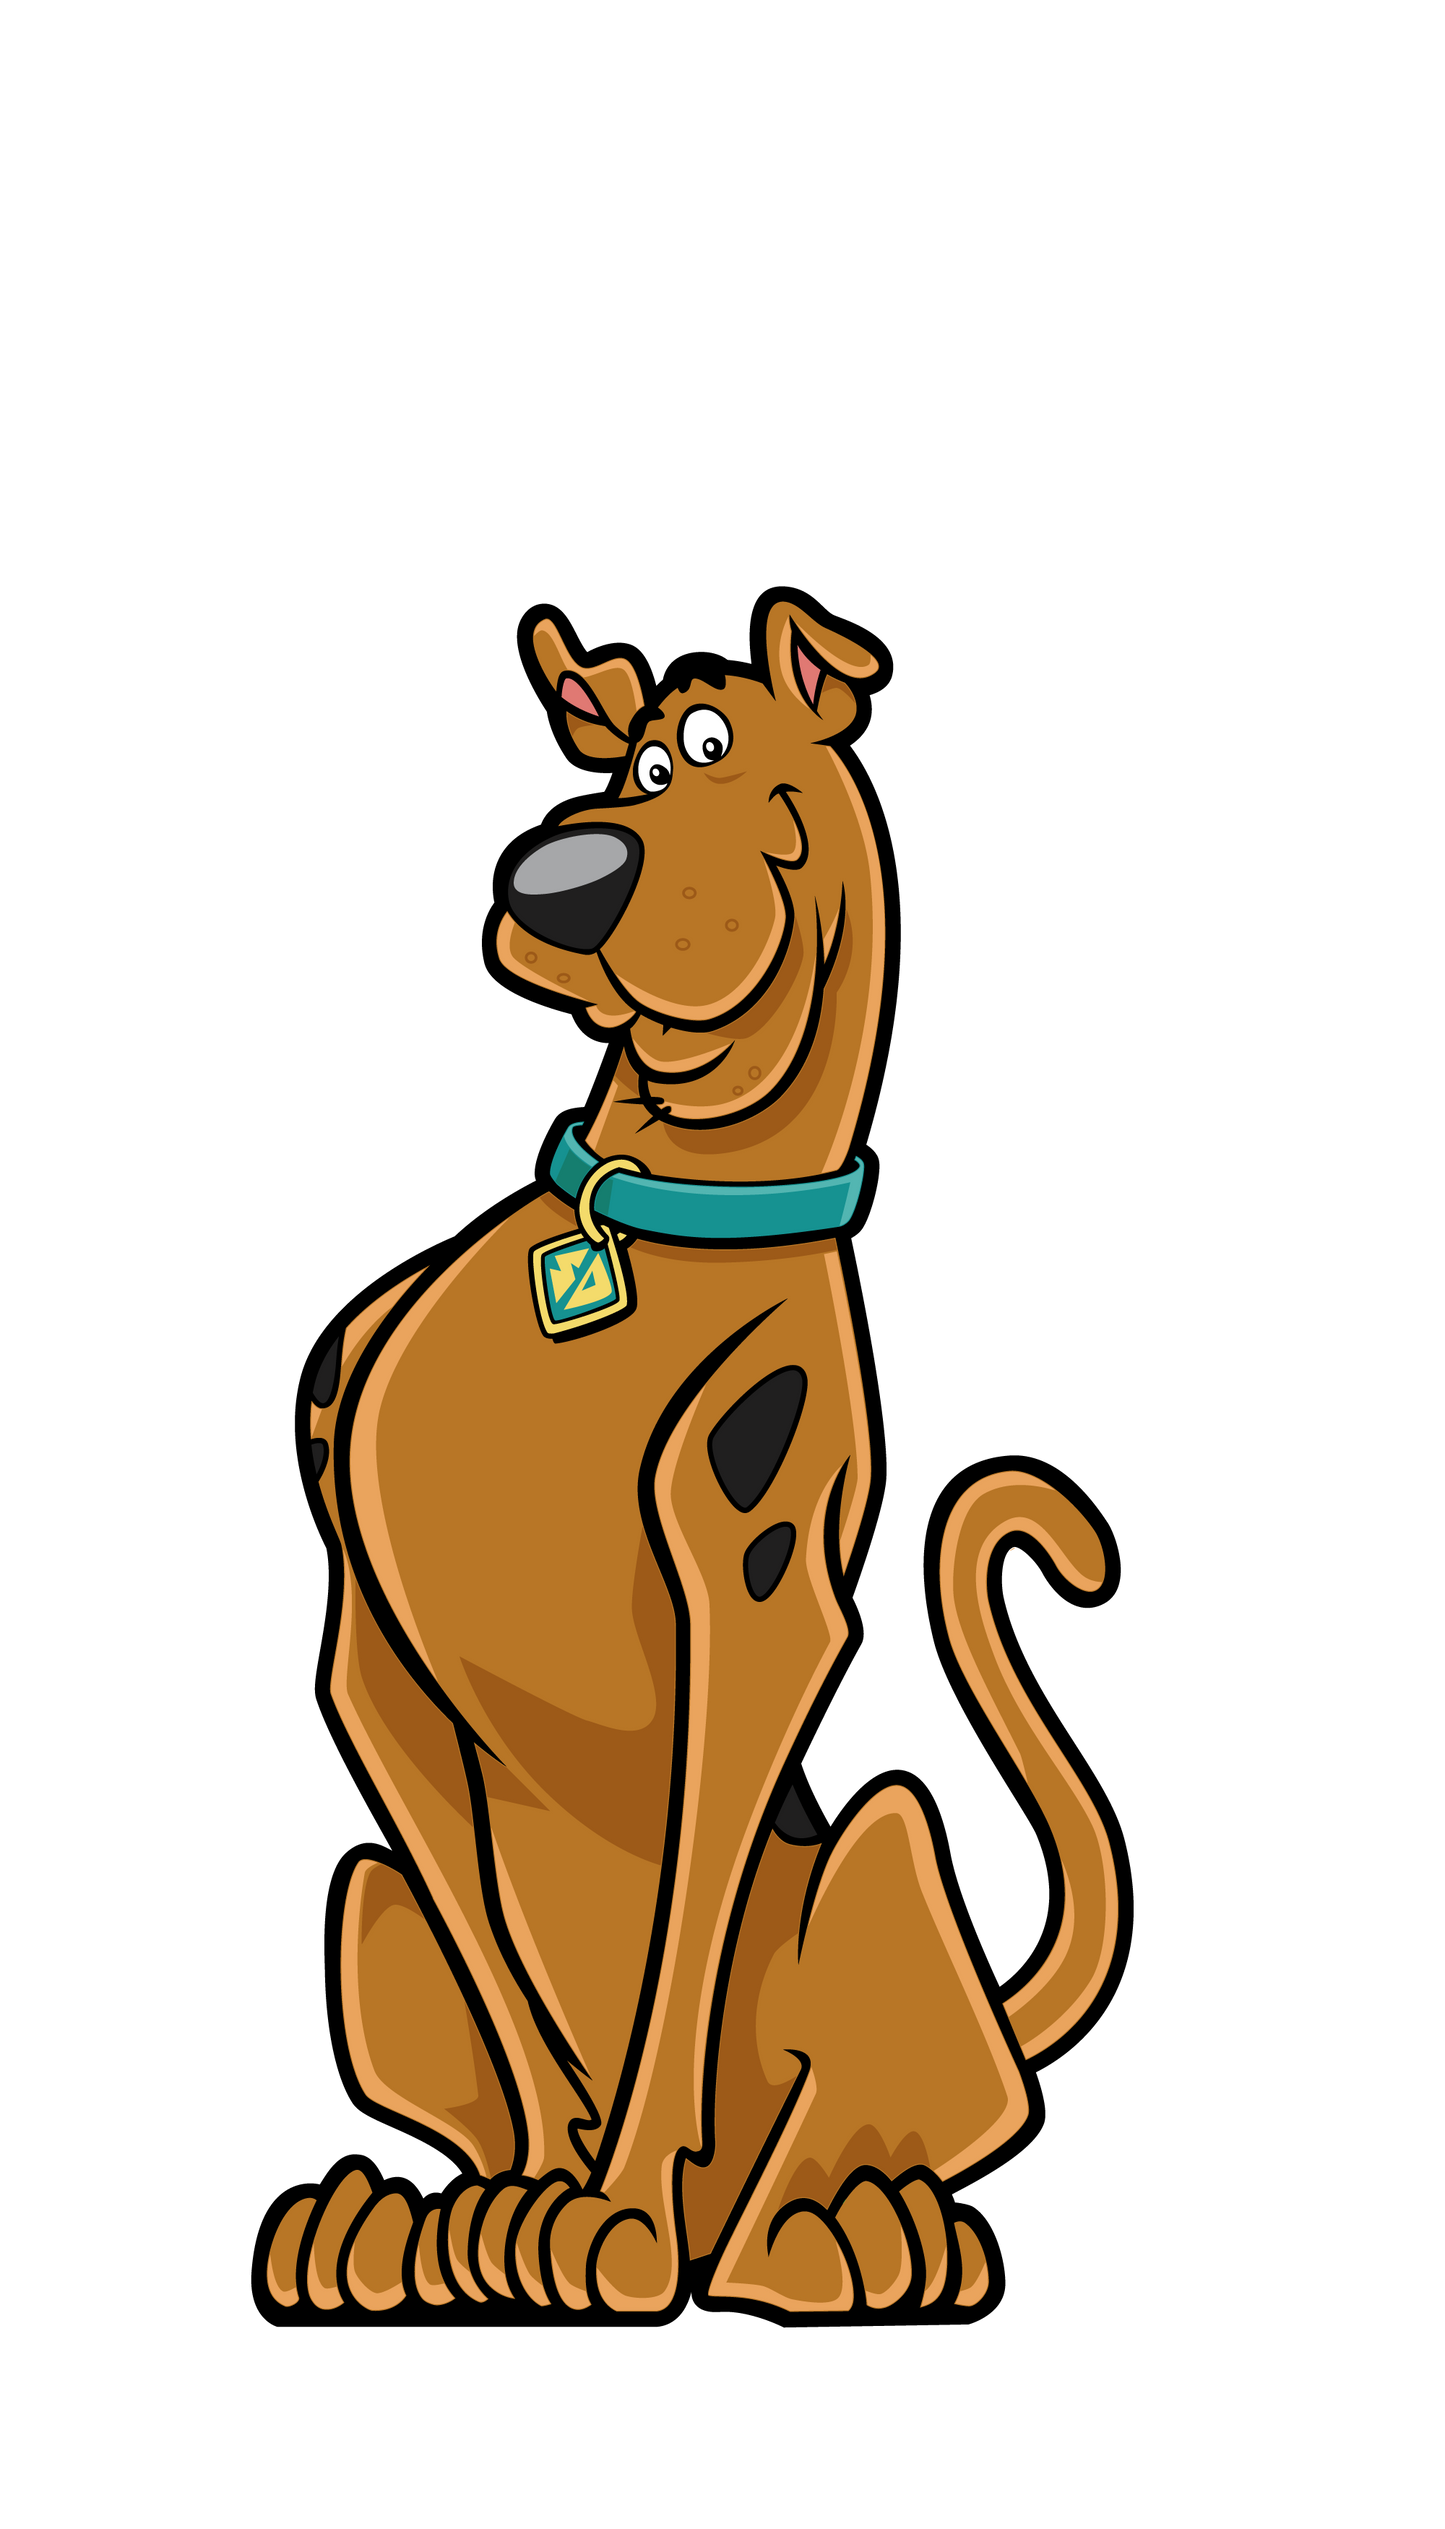 Scooby-Doo #718 - Scooby-Doo - FiGPiN